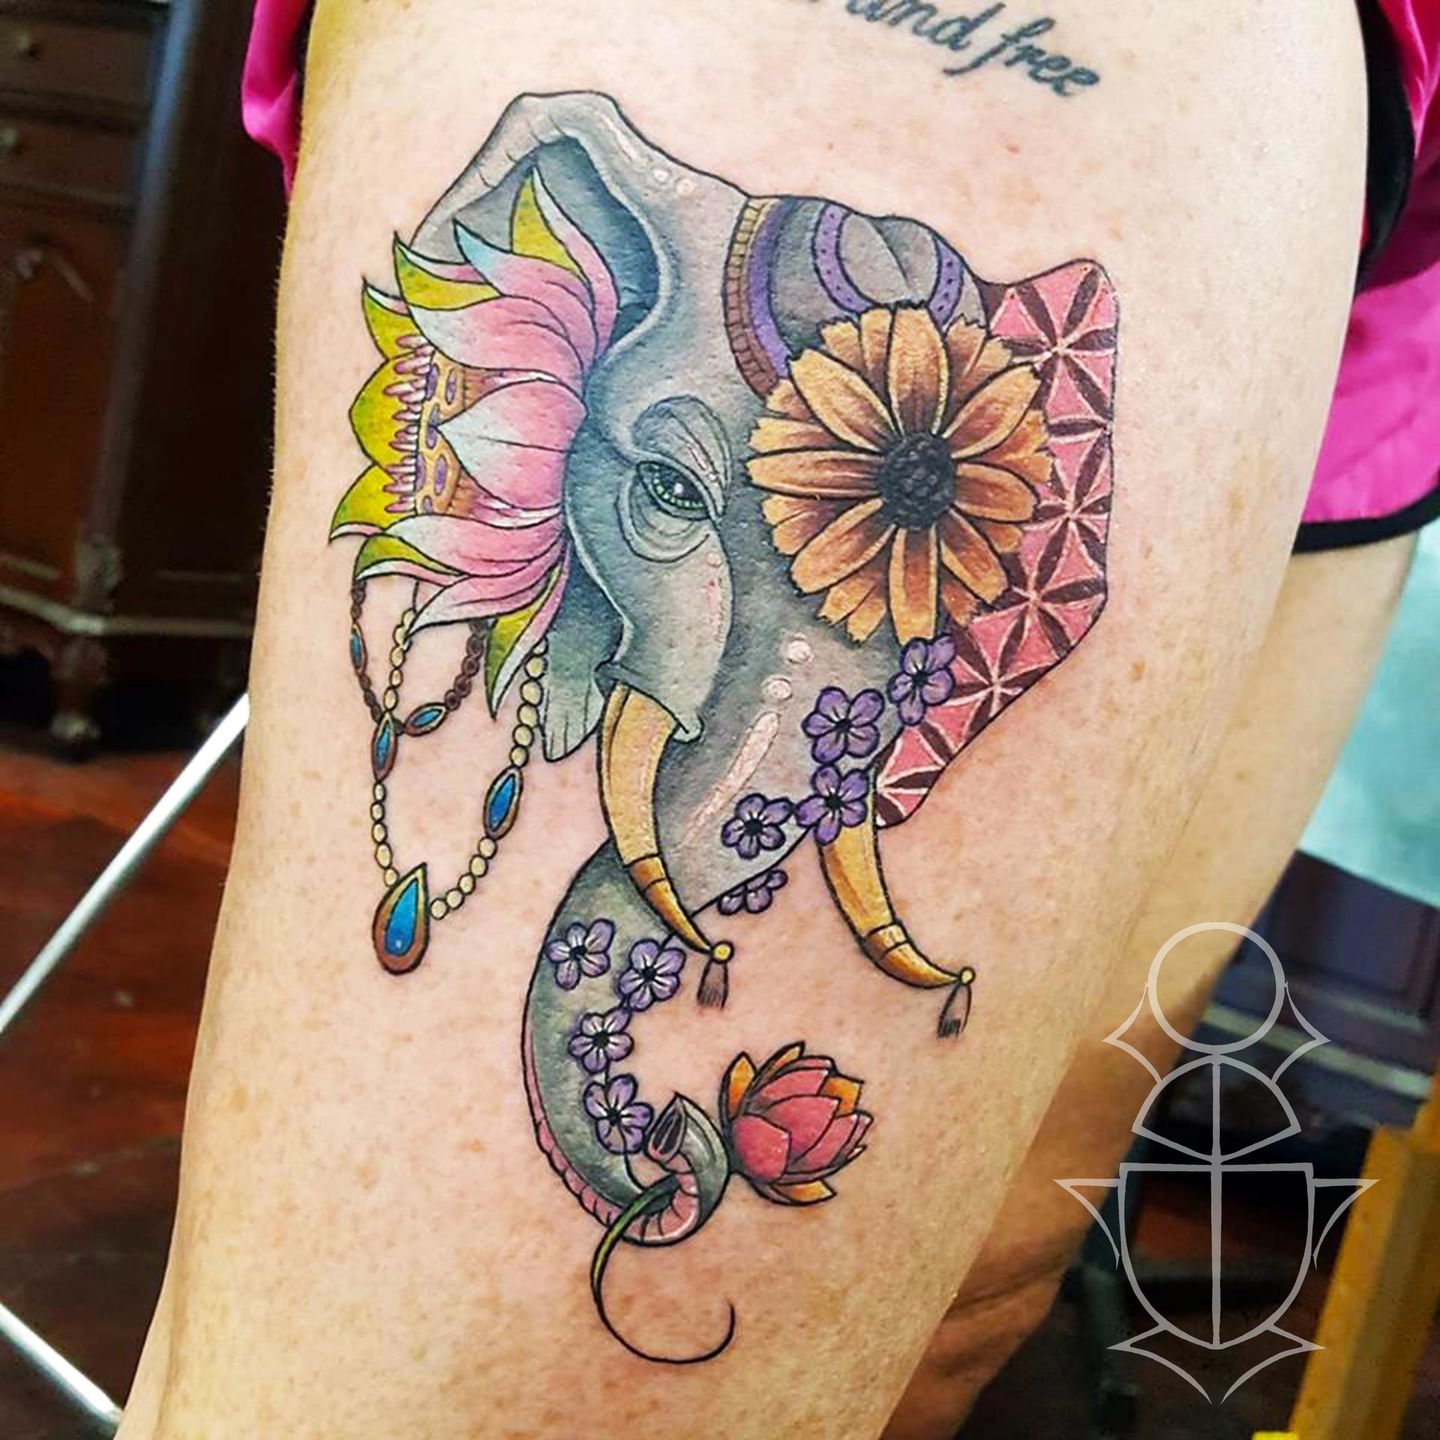 Cool Elephant Tattoo Ideas  Styletic